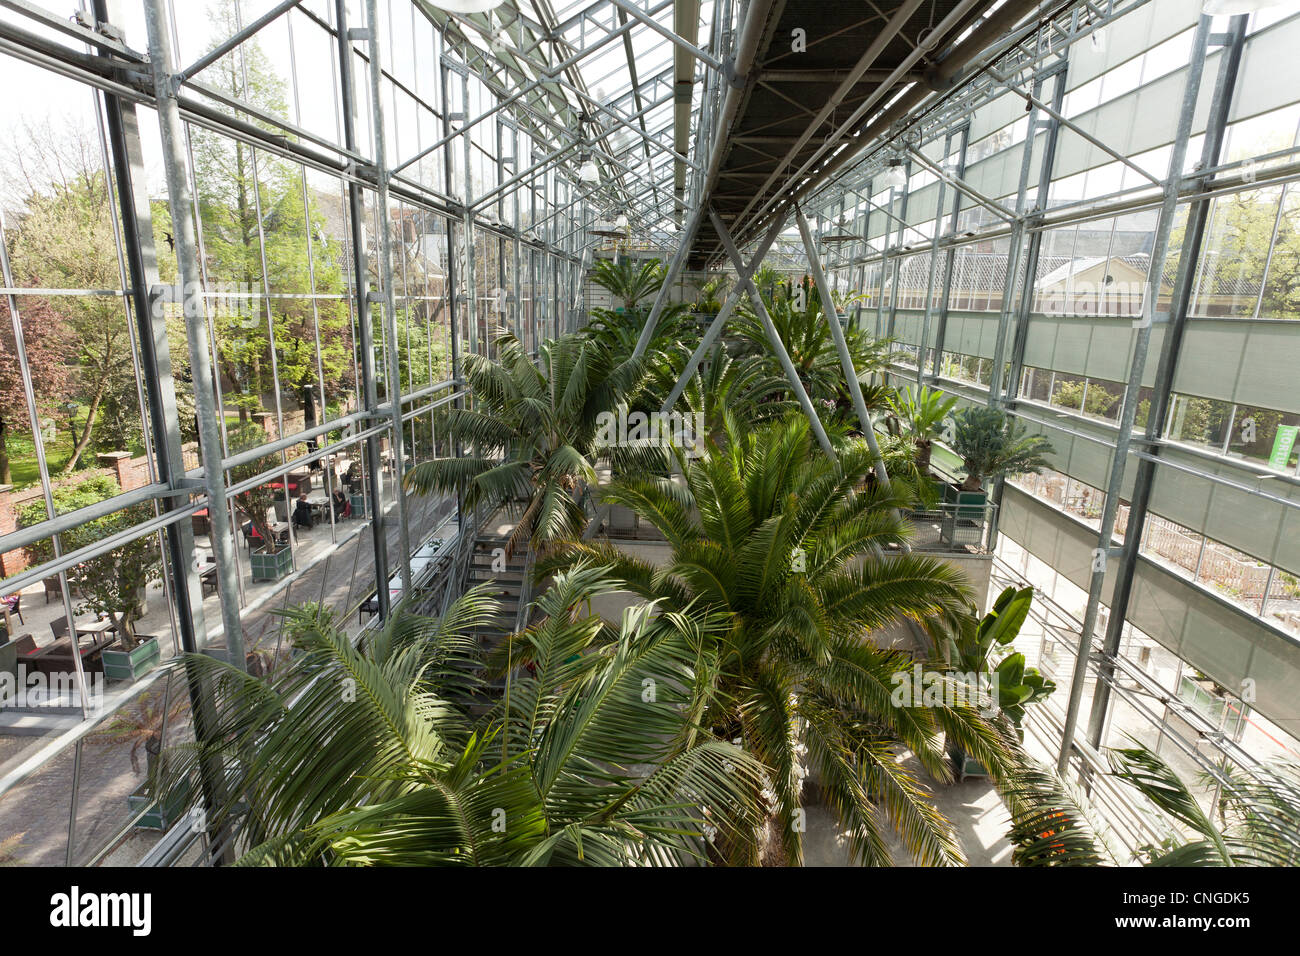 Holland, Leyden, Hortus Botanicus, botanical garden of the University of Leyden, the modern greenhouse and the cycads. Stock Photo